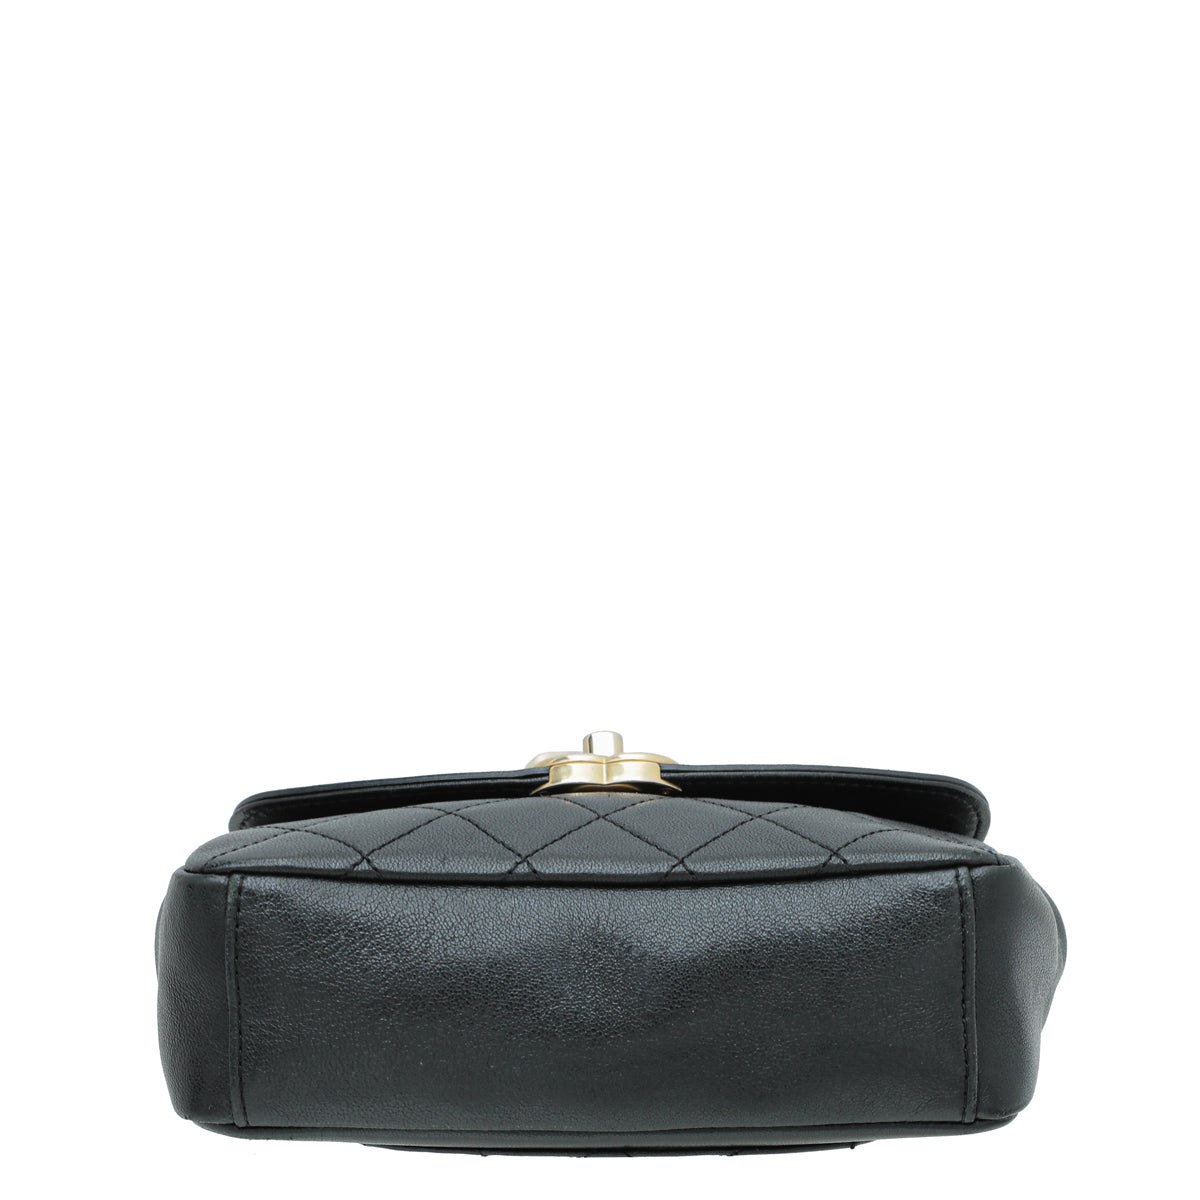 Chanel Black CC Small Bag